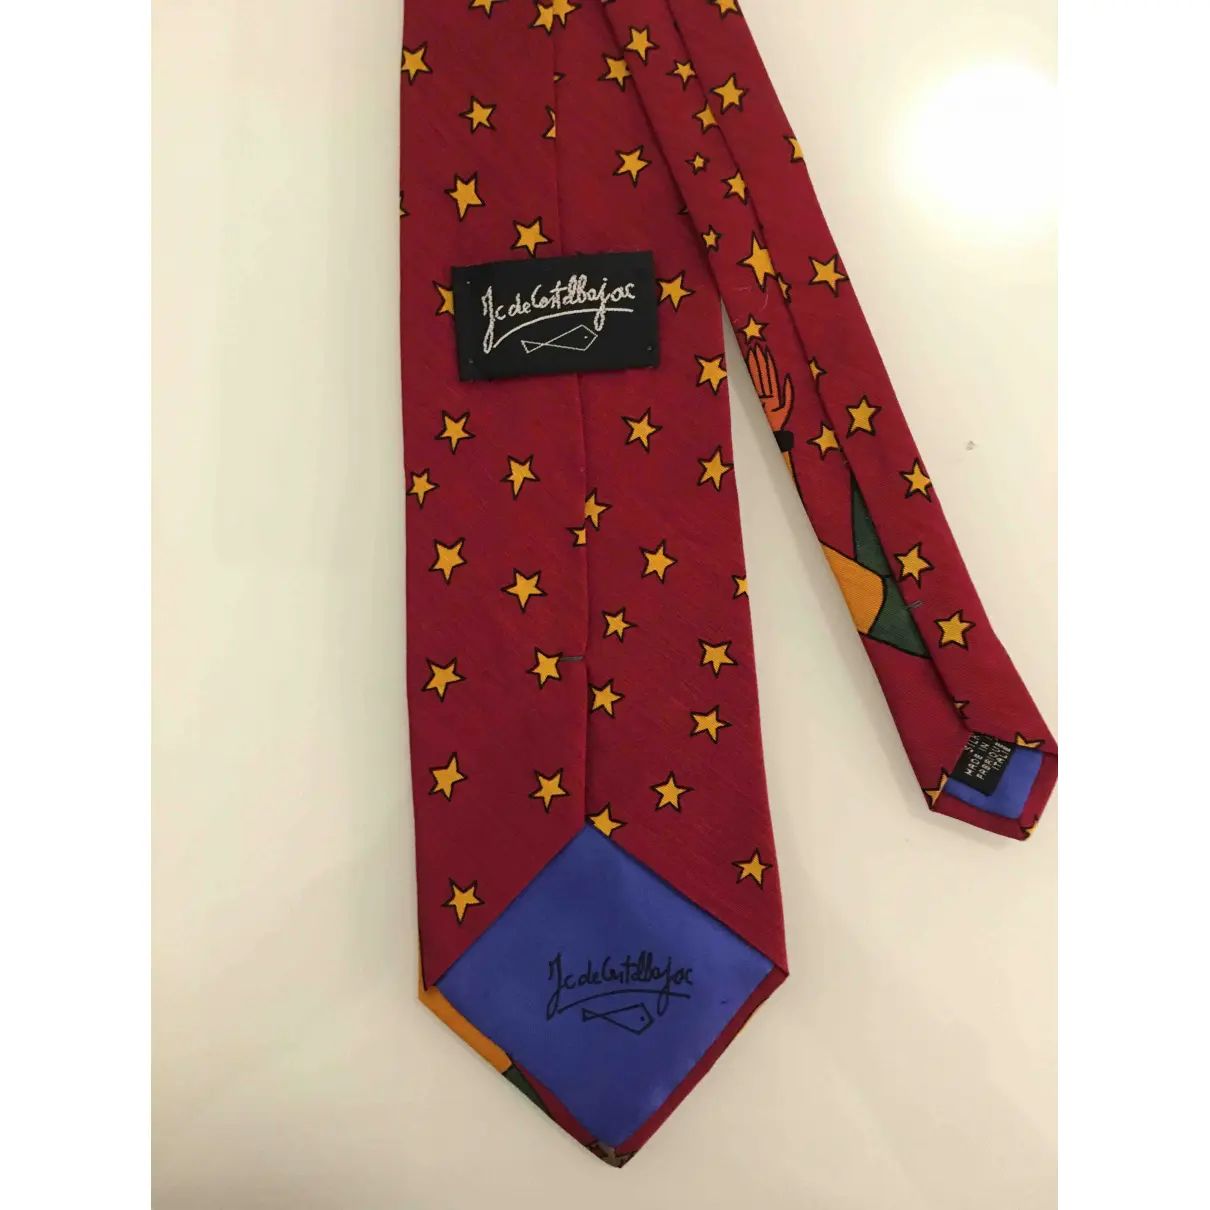 Buy JC De Castelbajac Silk tie online - Vintage